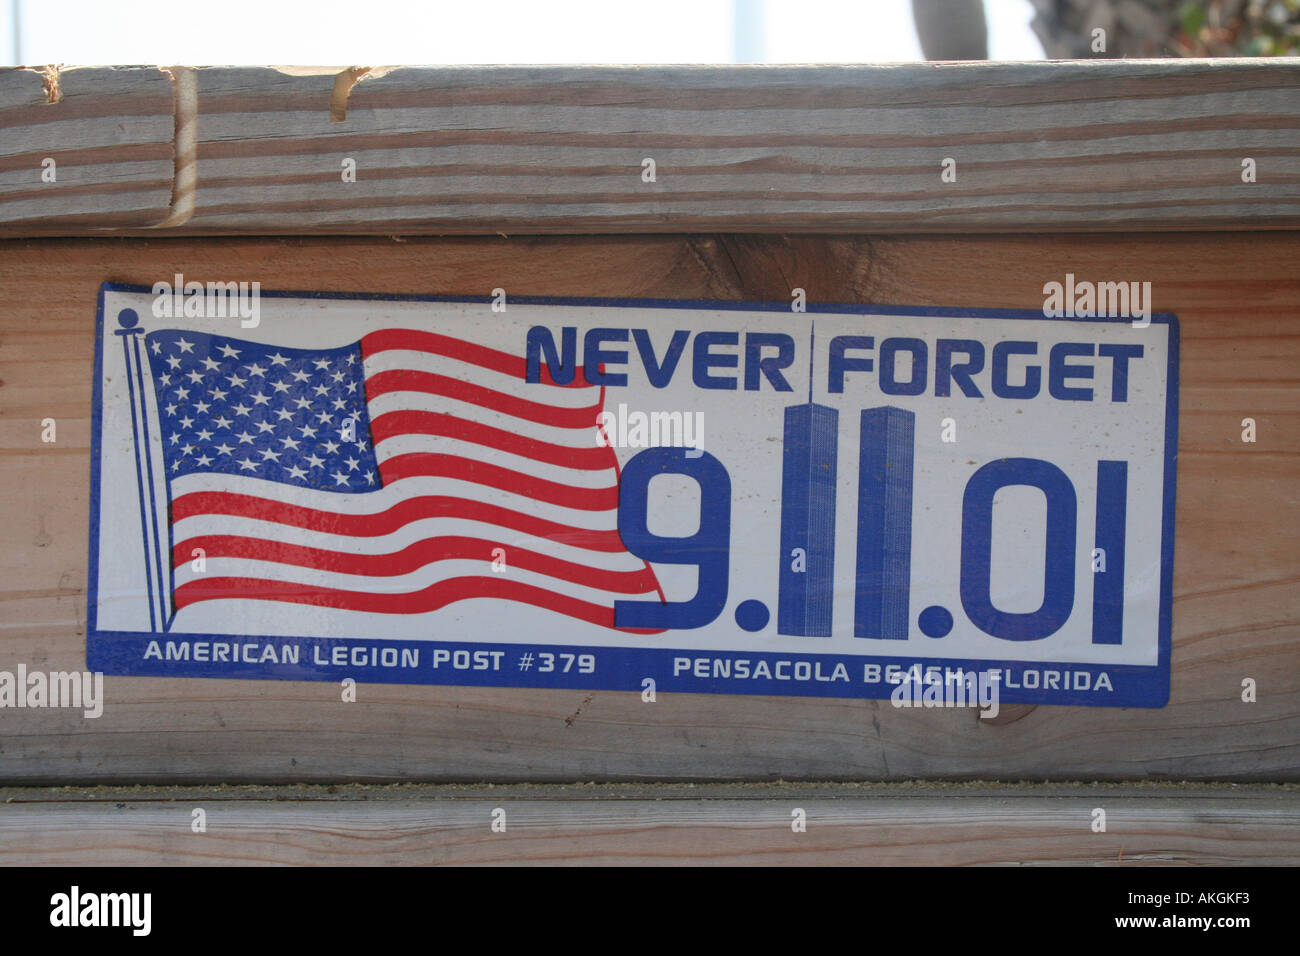 Never Forget 9/11, Pensacola Beach Florida, USA Stock Photo